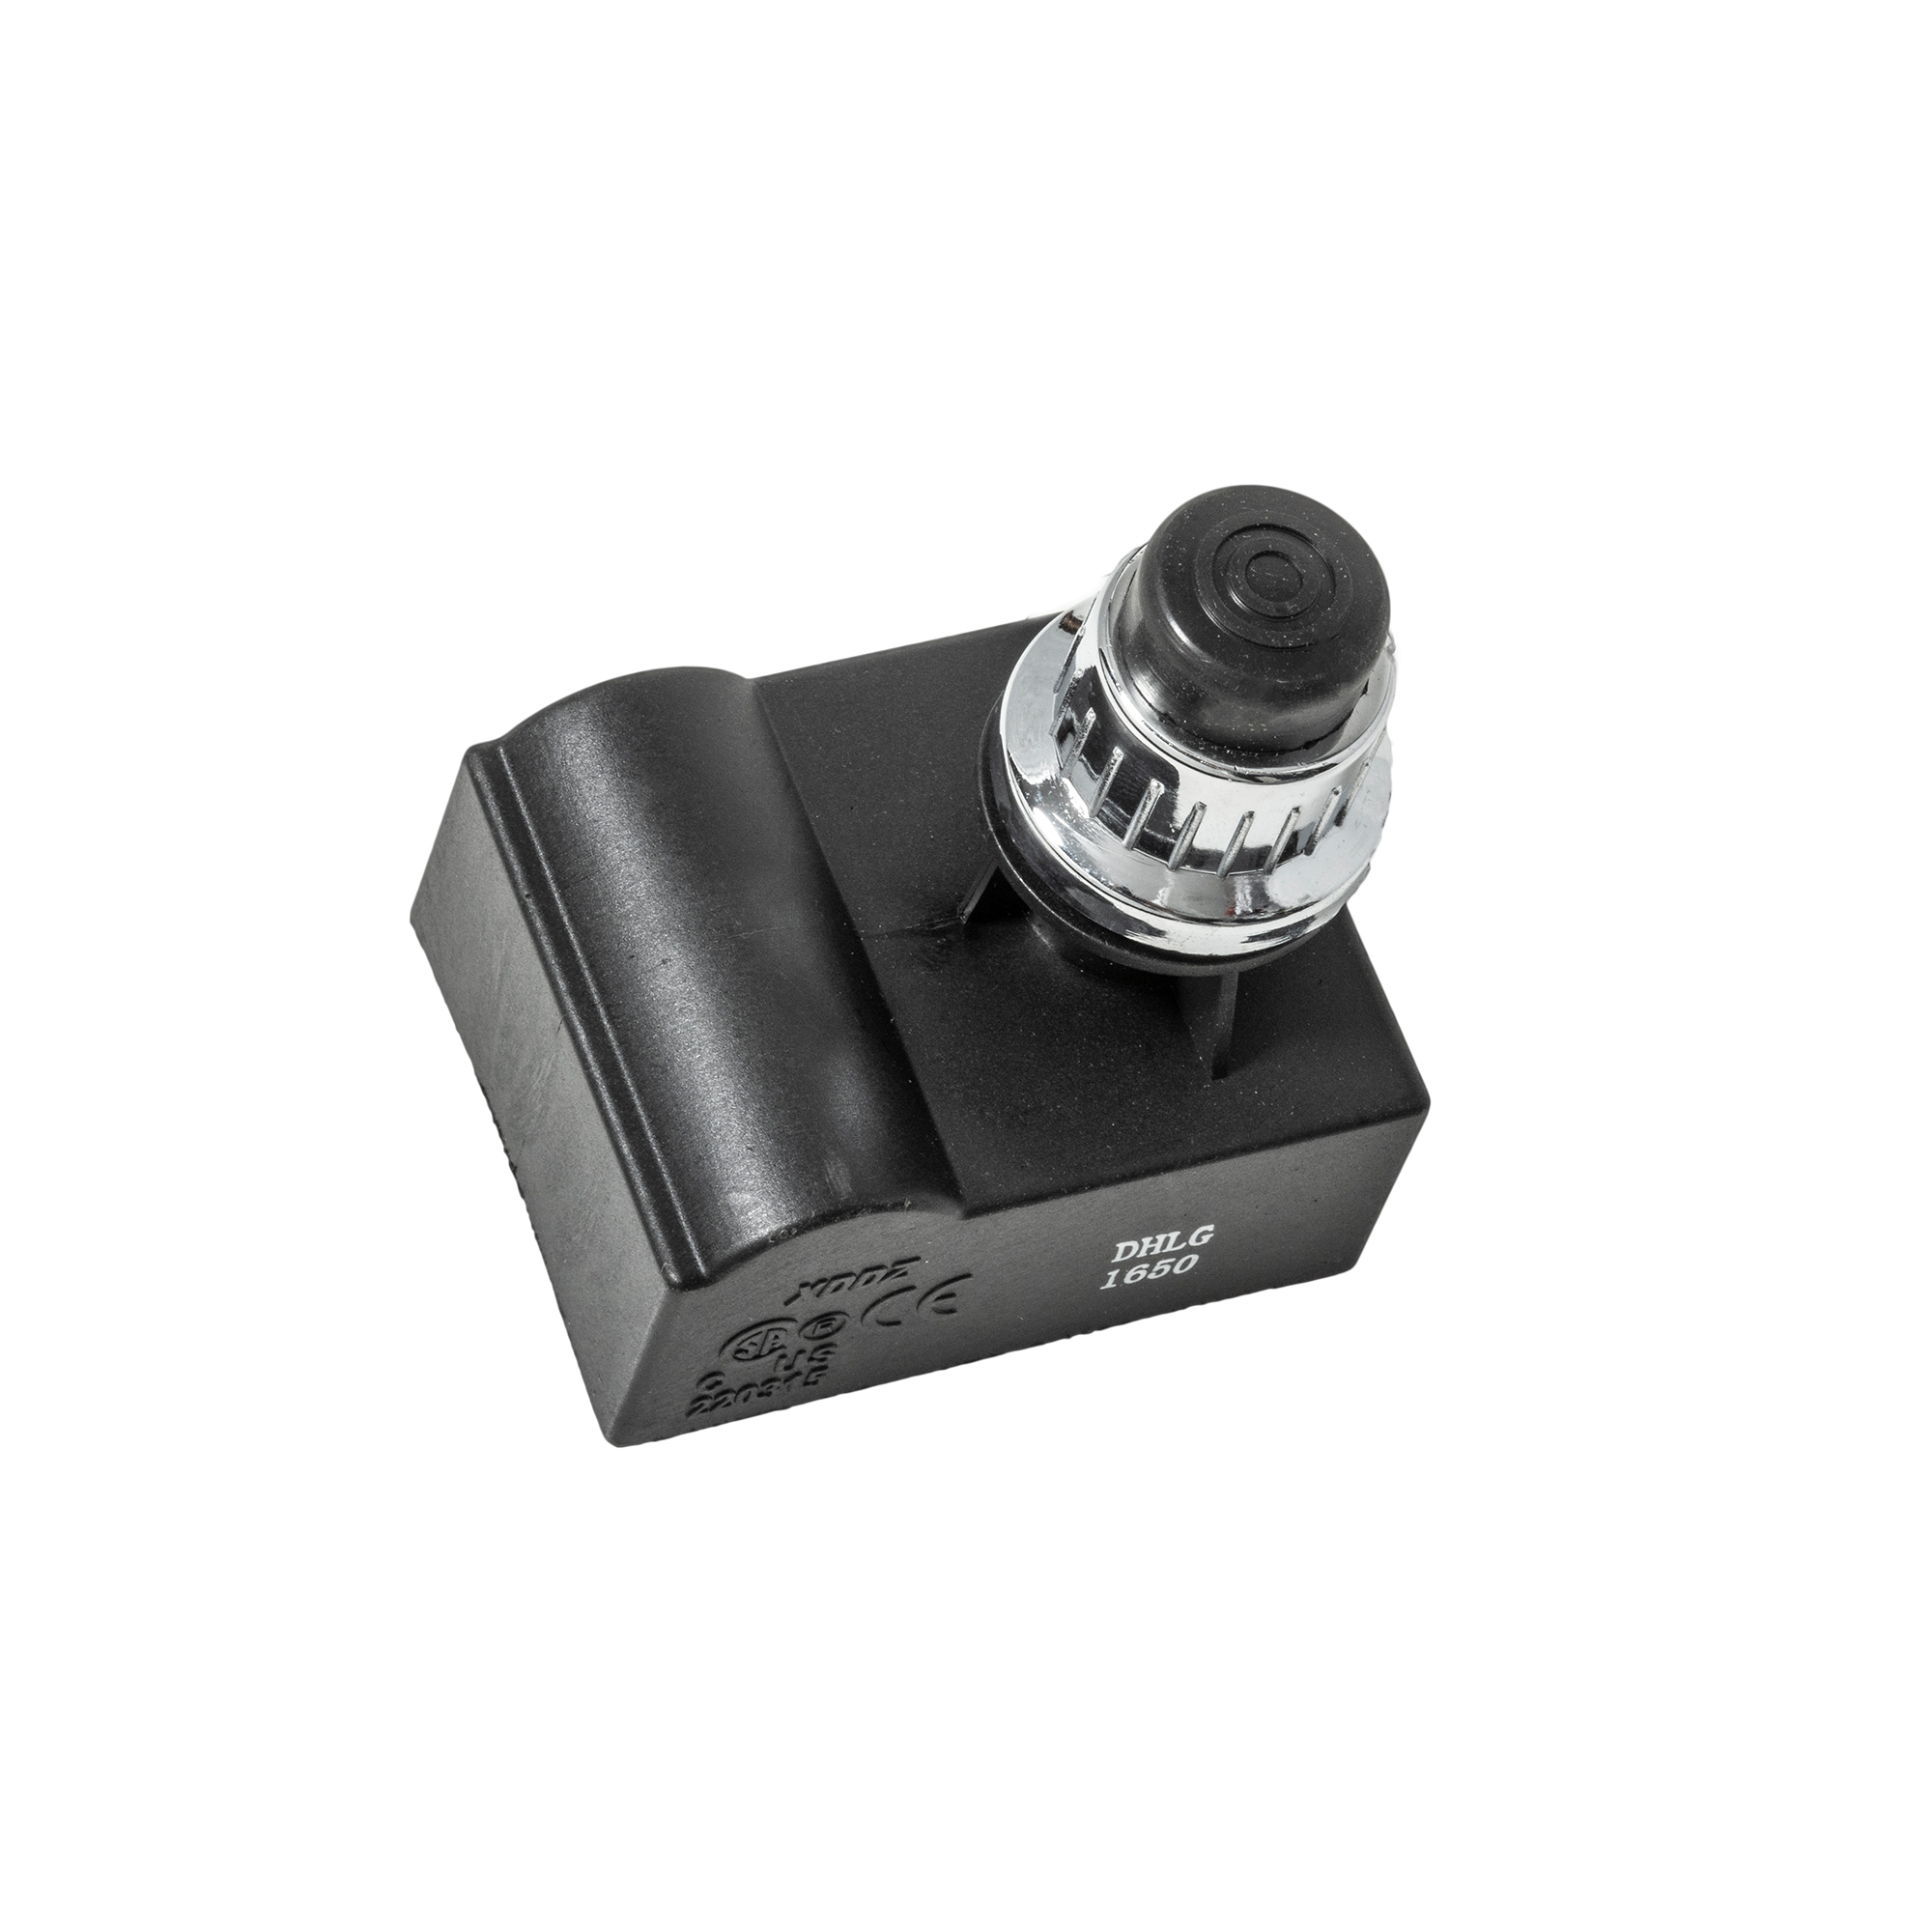 Electronic Ignitor for side burner (Vision G3/G4)